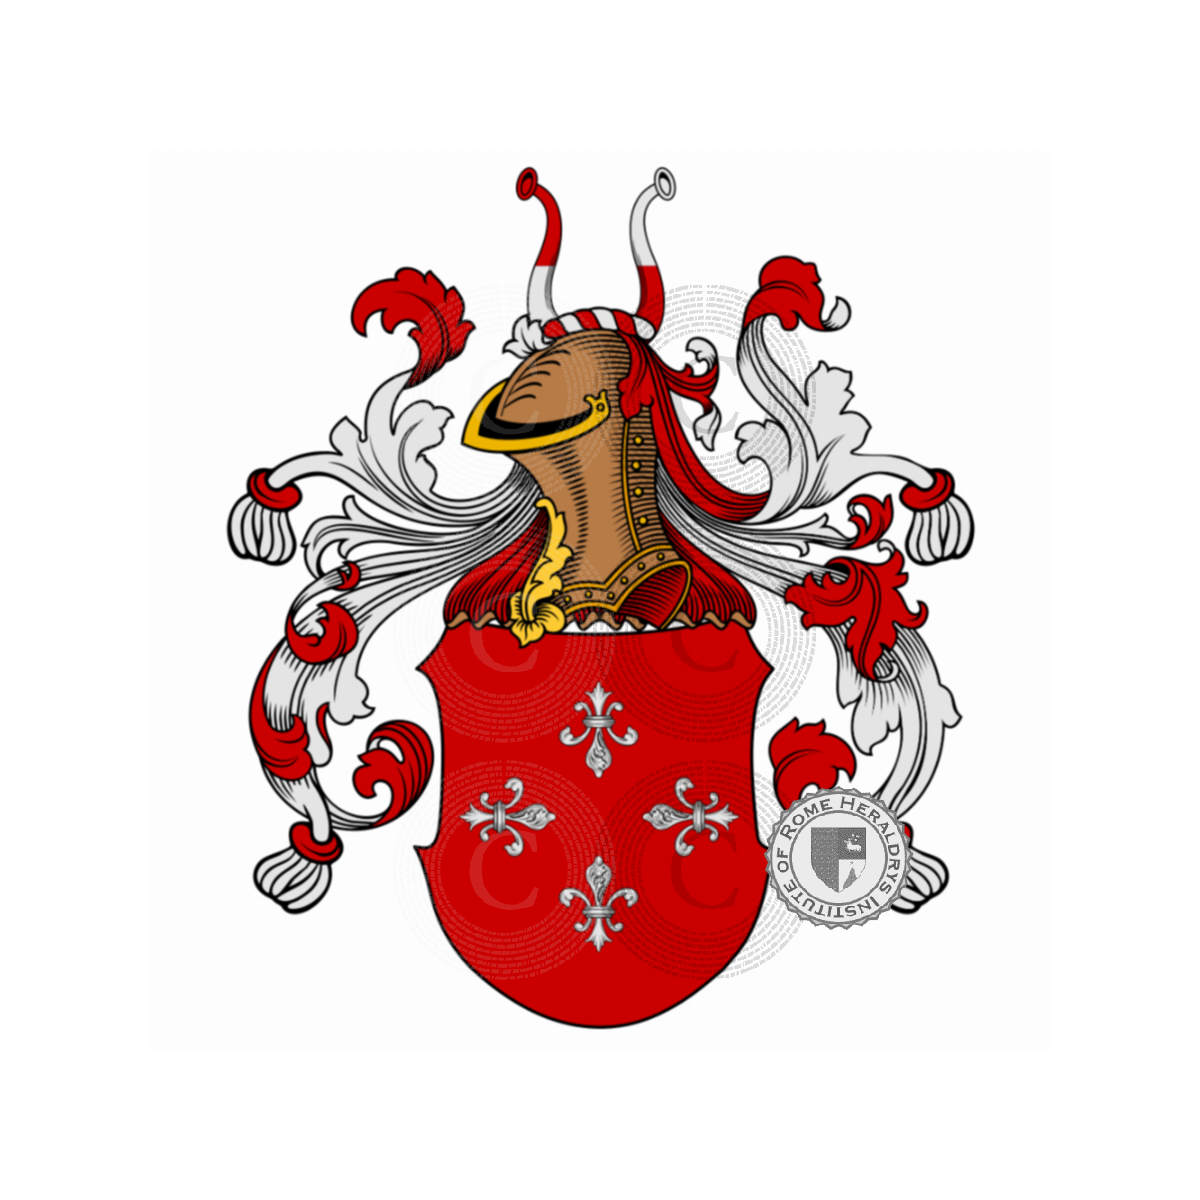 Wappen der FamiliePfahler, Pfadler,Pfähler